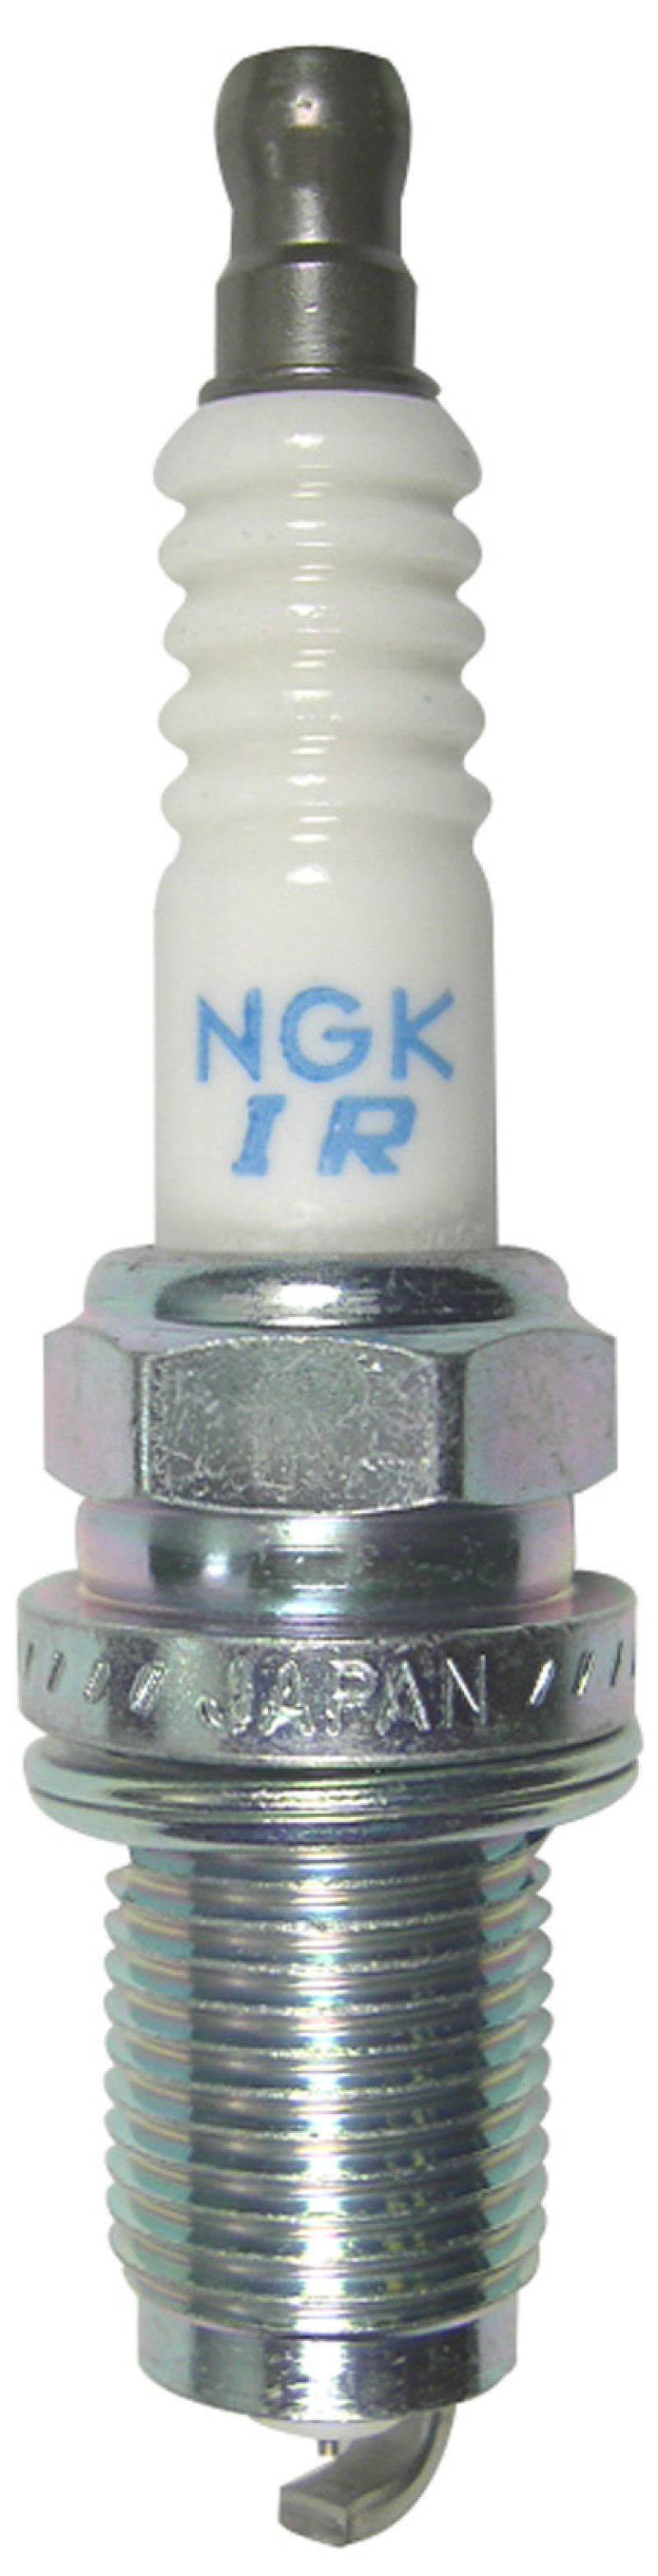 NGK MDX Iridium Spark Plug Box of 4 (IZFR5K11) - 3657